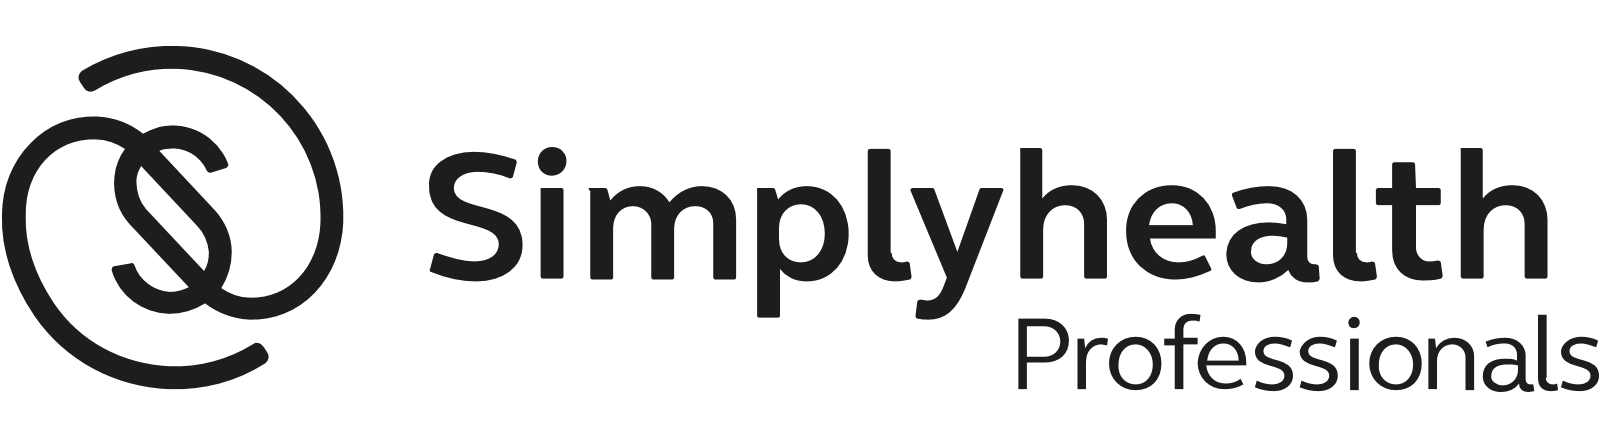 Simplyhealth professionals logo